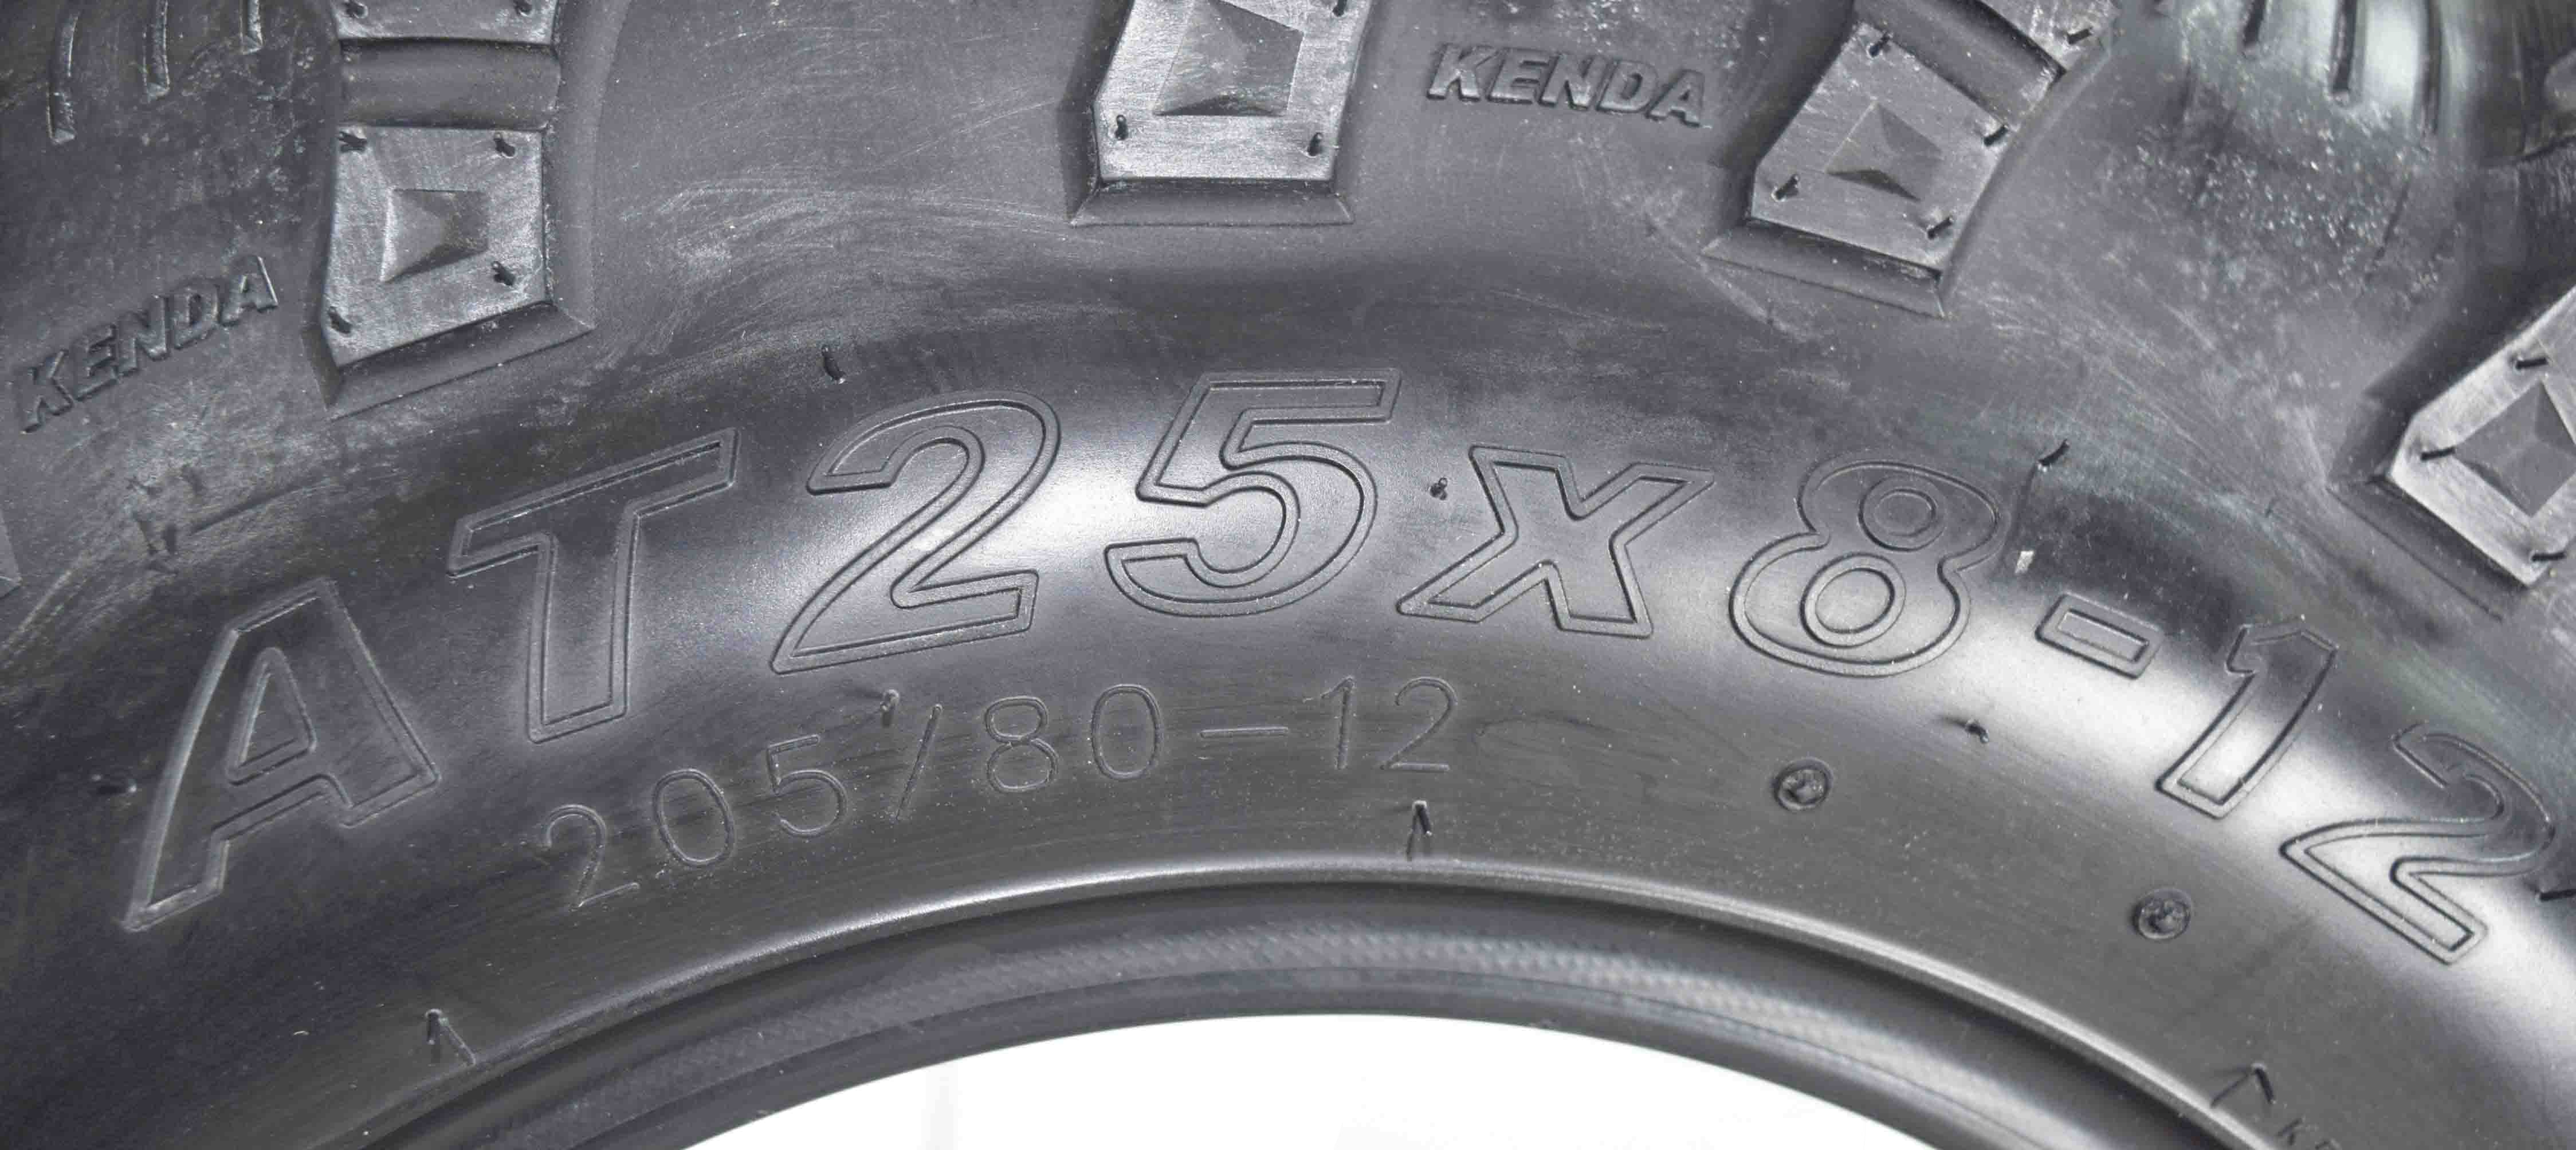 Kenda Bear Claw EVO  25x8-12 Front ATV/UTV Tires 2 Pack with Bottle Opener Keychain